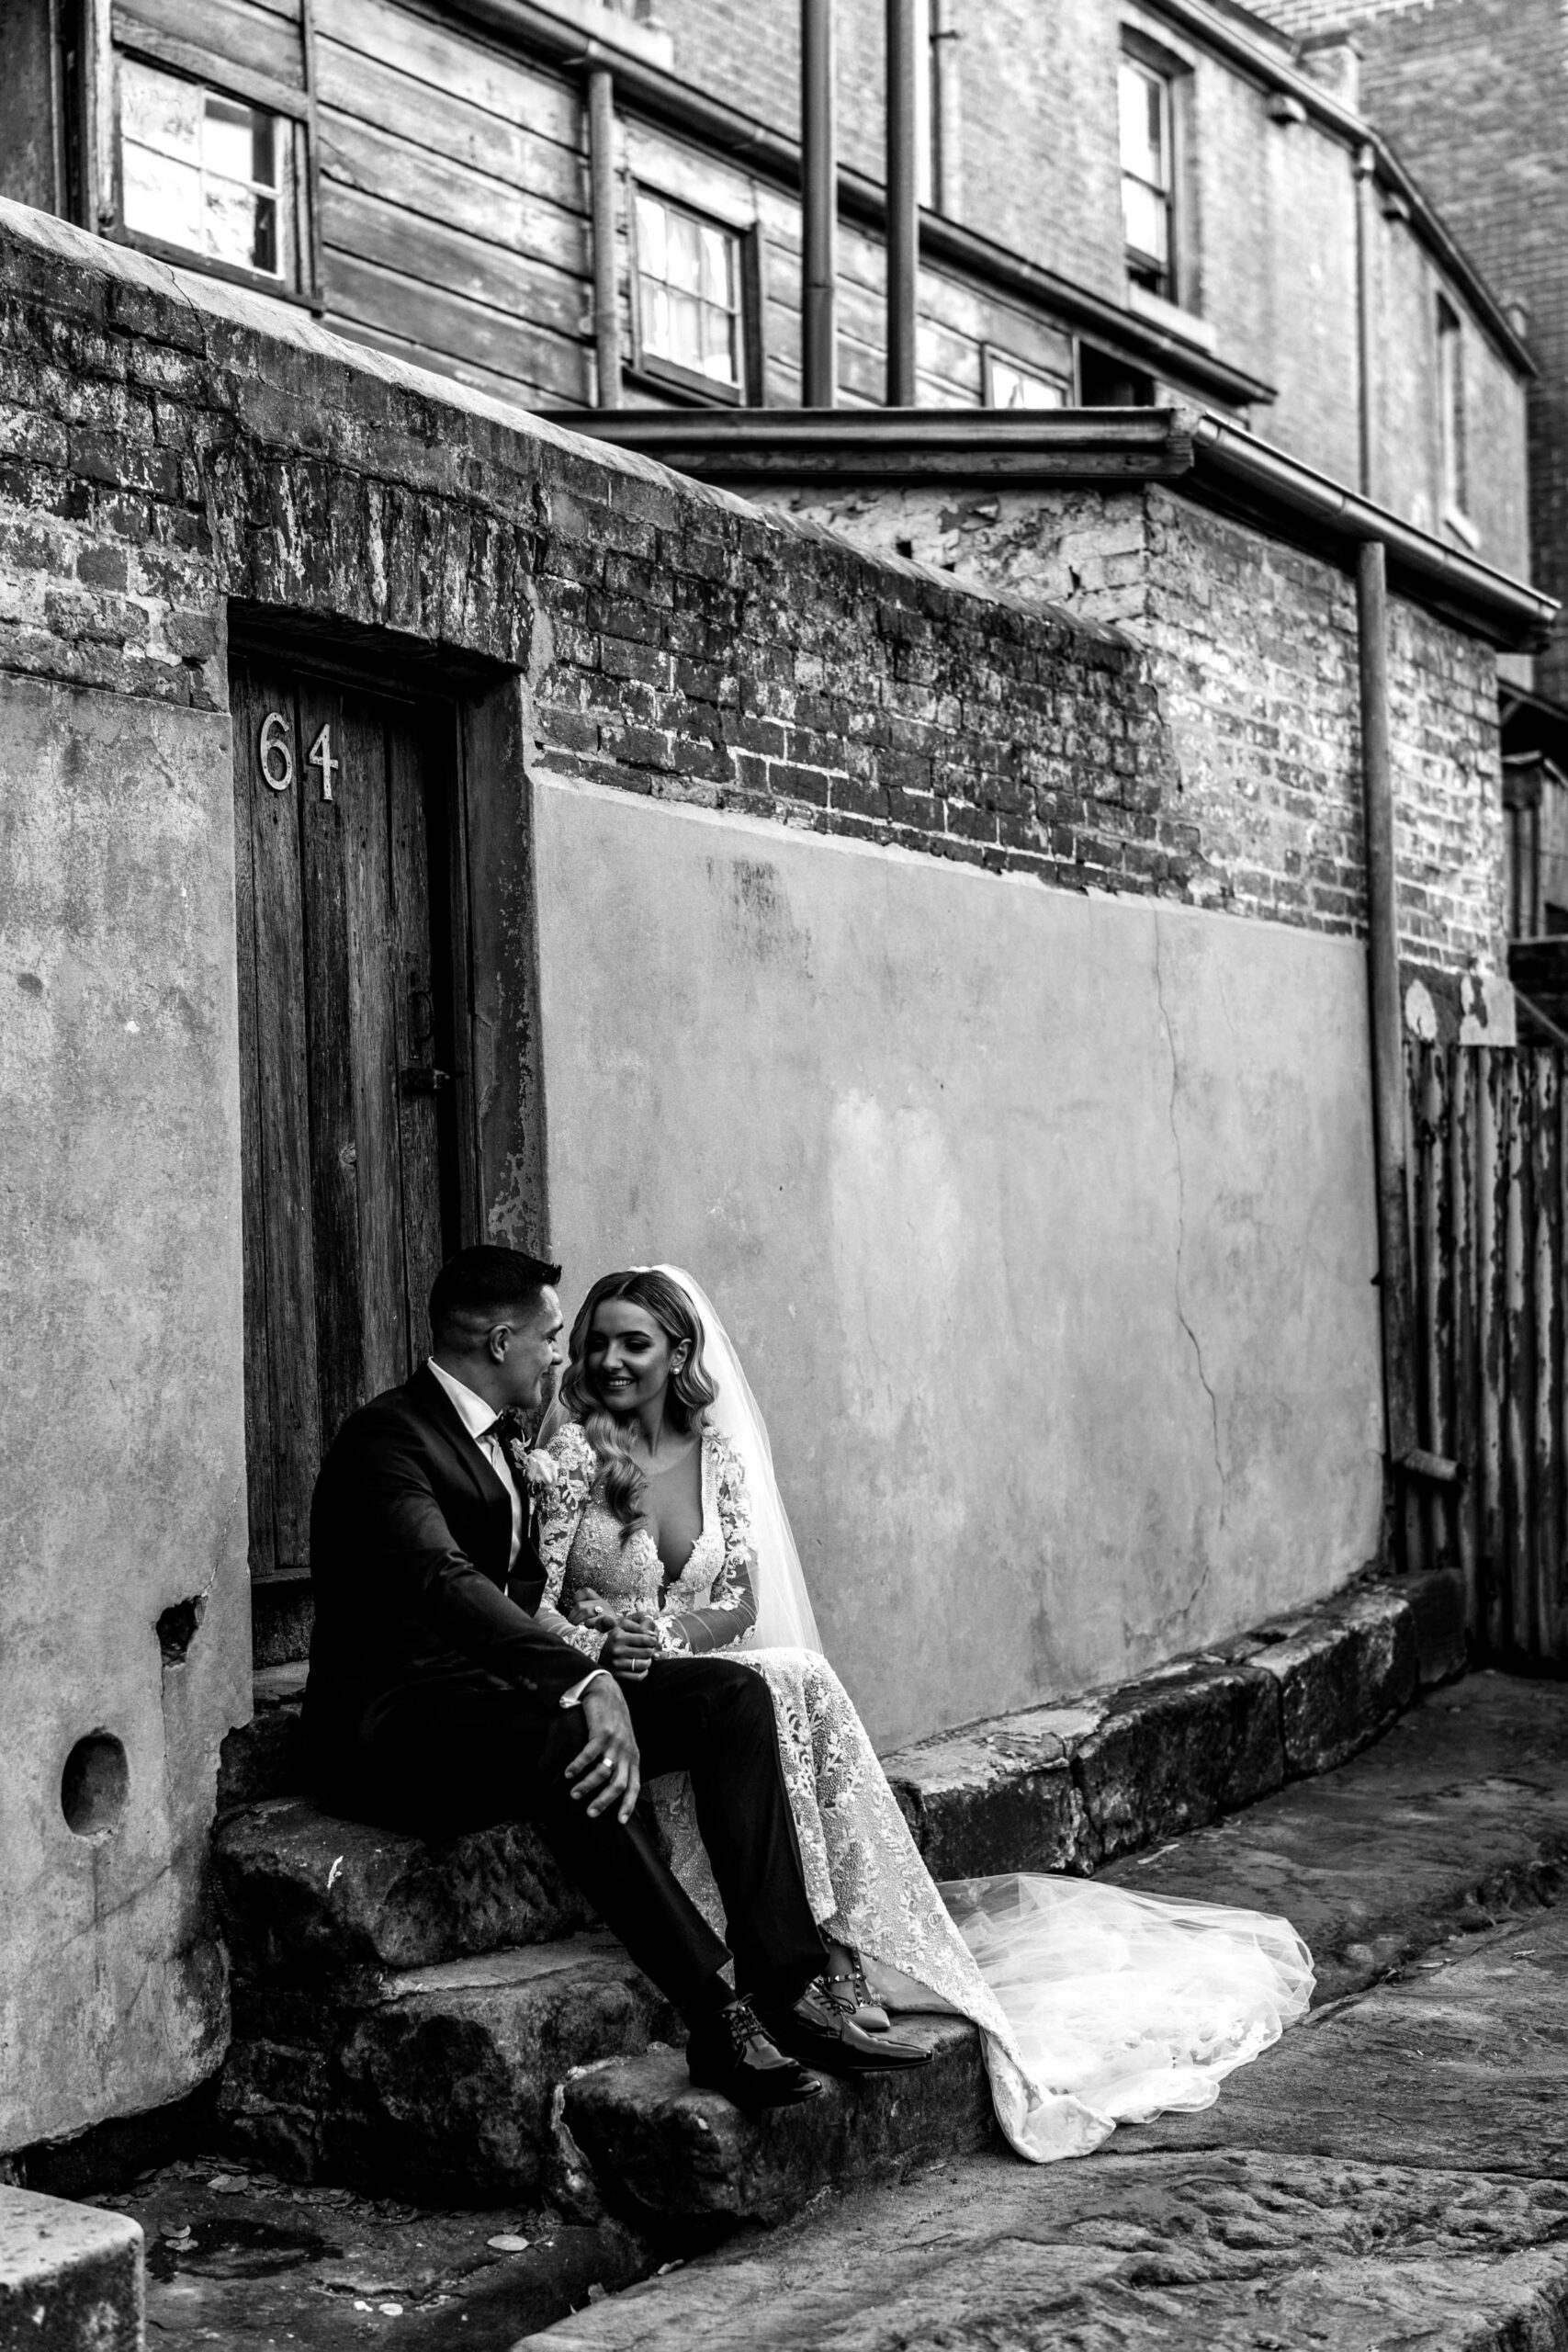 Doltone House Jones Bay Wharf Sydney wedding, Riannon and Mitch, black and white bridal portrait, photo by The Evoke Company